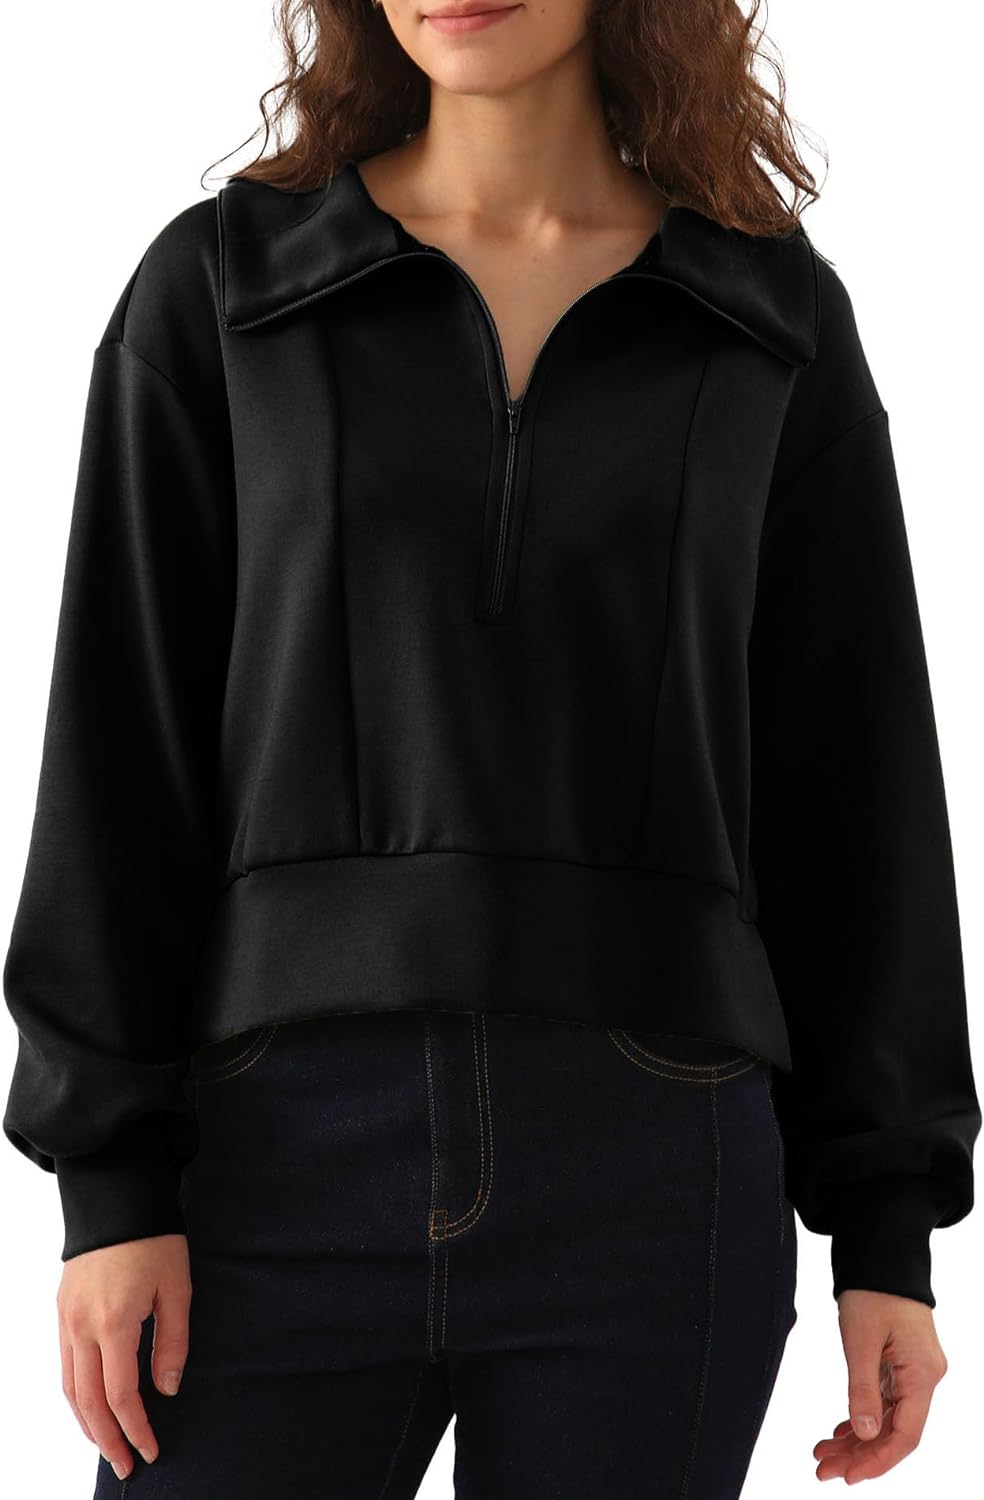 NTG Fad Black / Medium Cropped Quarter Zip Sweatshirts Slightly Crop Tops